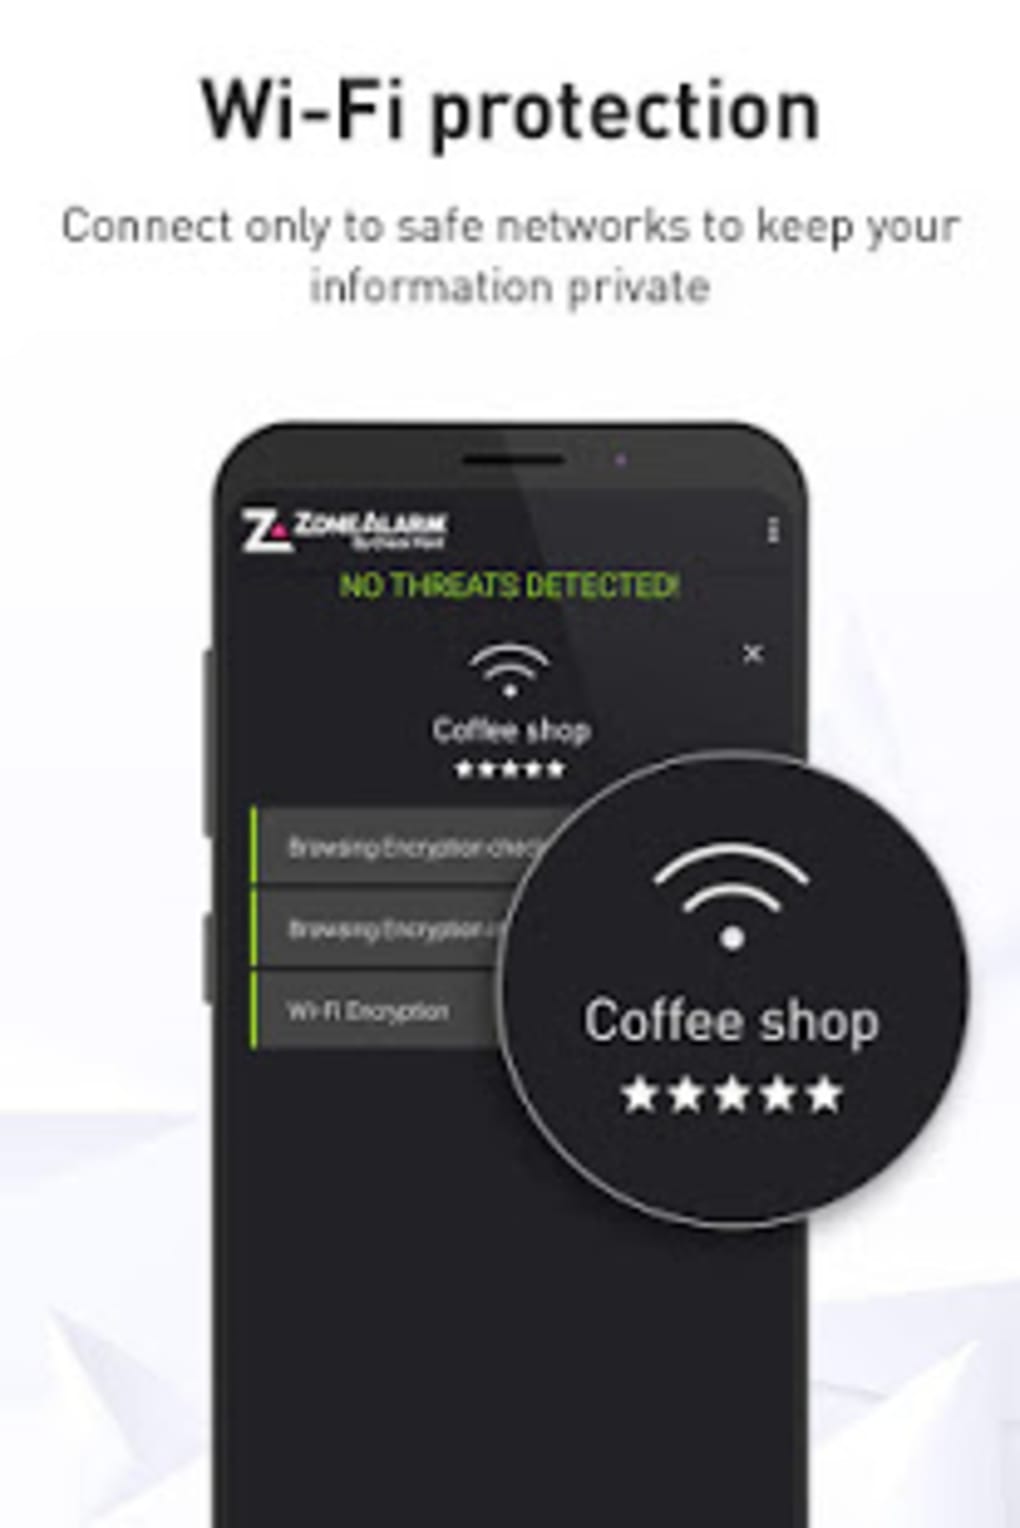 download zonealarm security